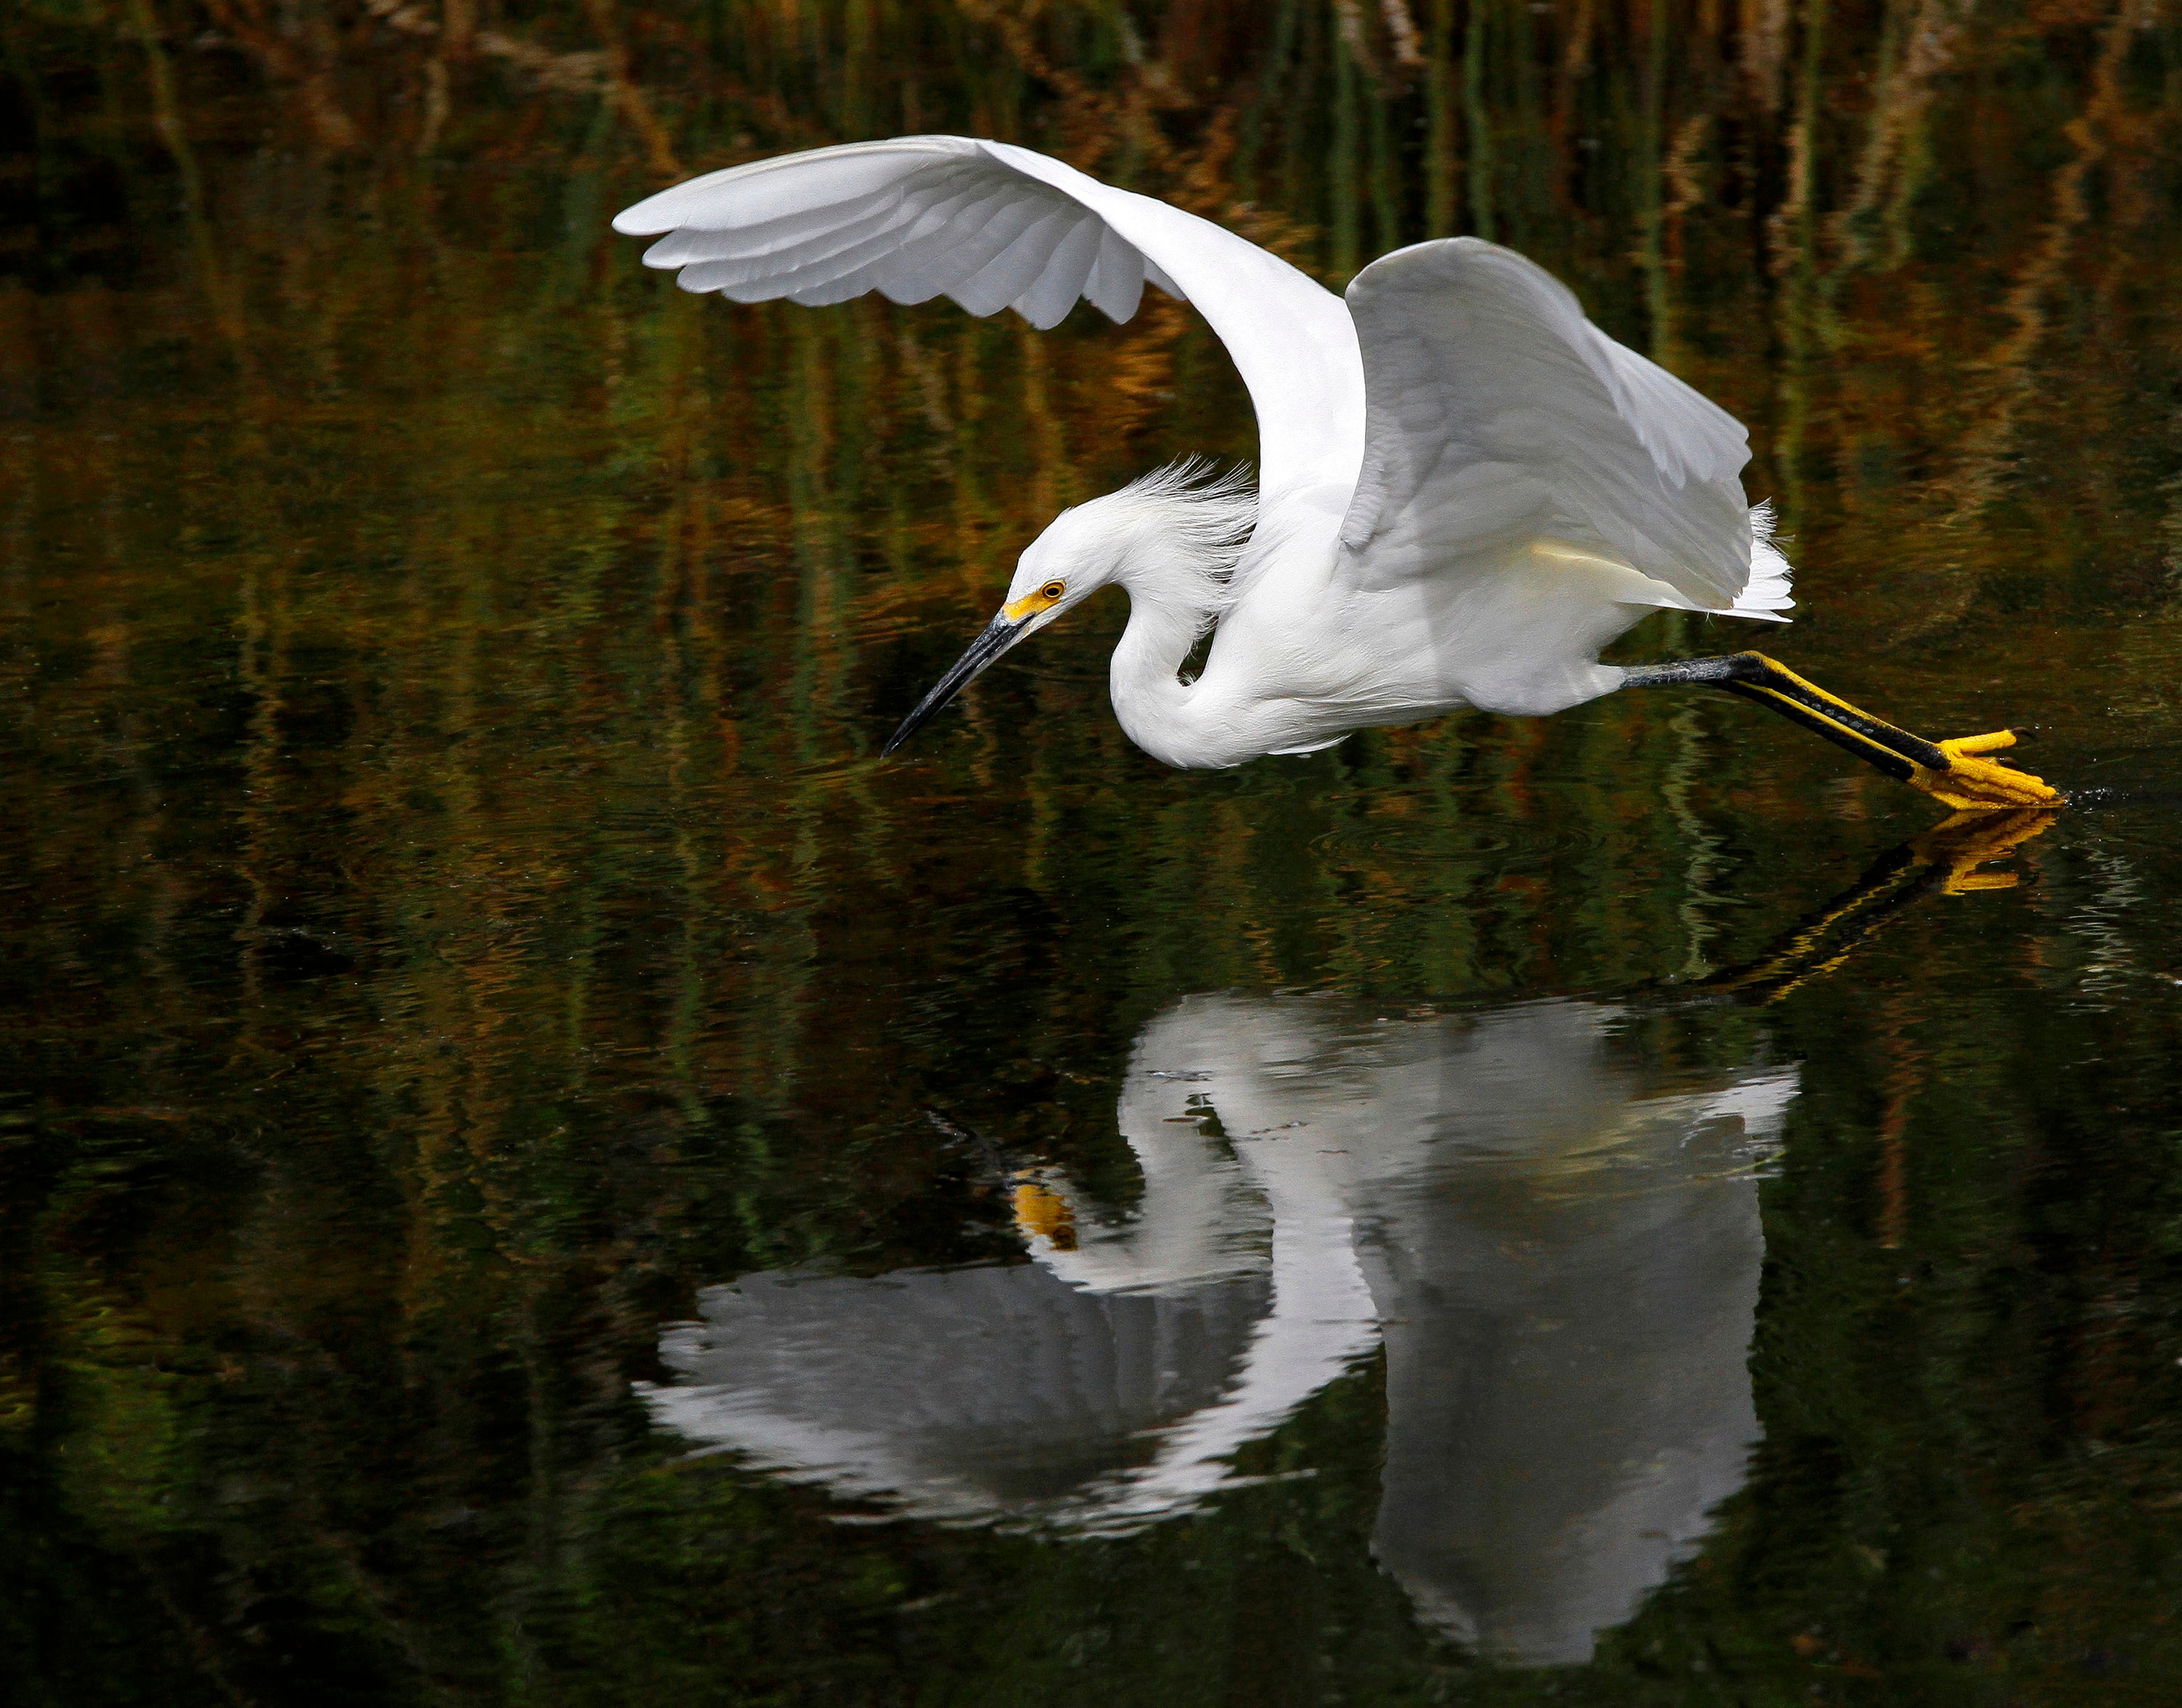 A heron flies low over the water